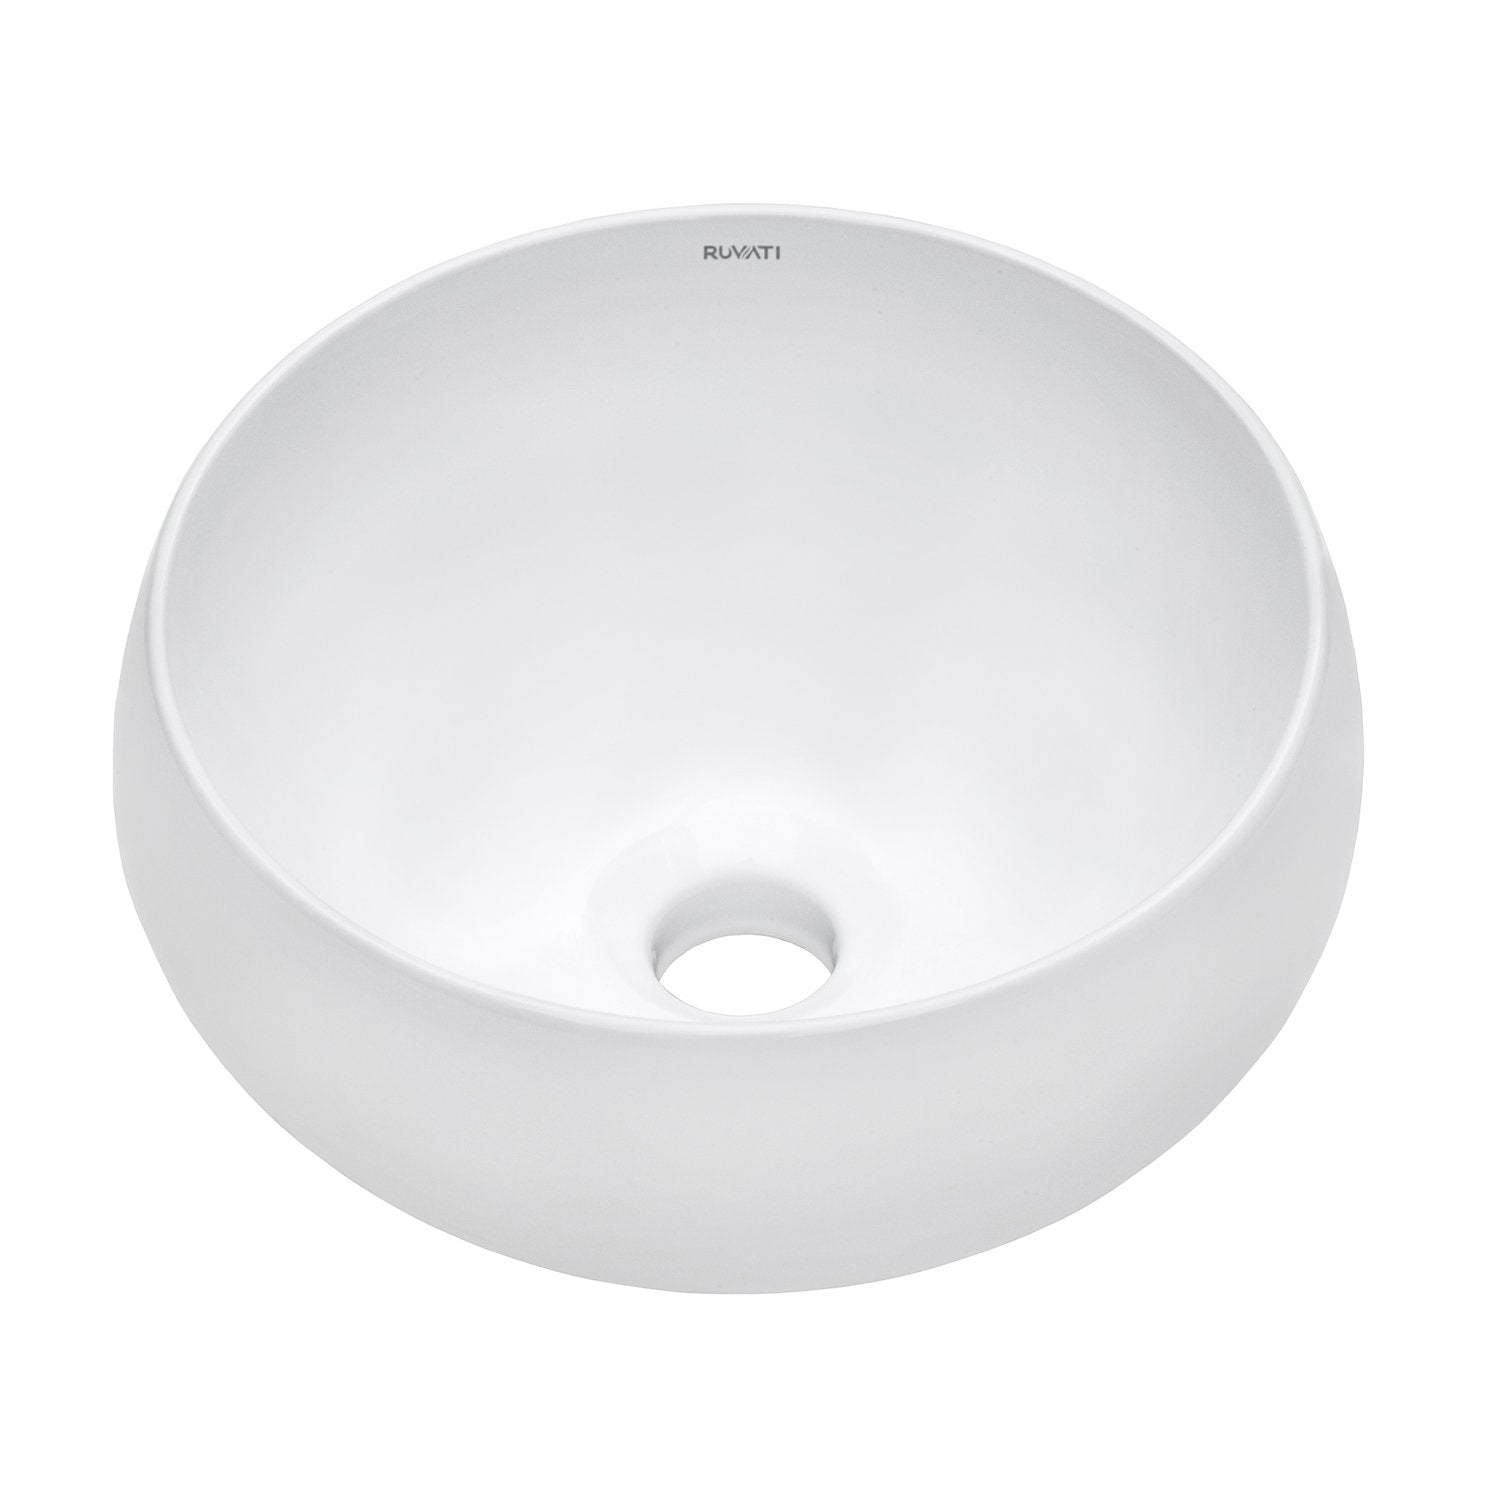 Ruvati 12" Circular Bathroom Vessel Sink in White  RVB0312